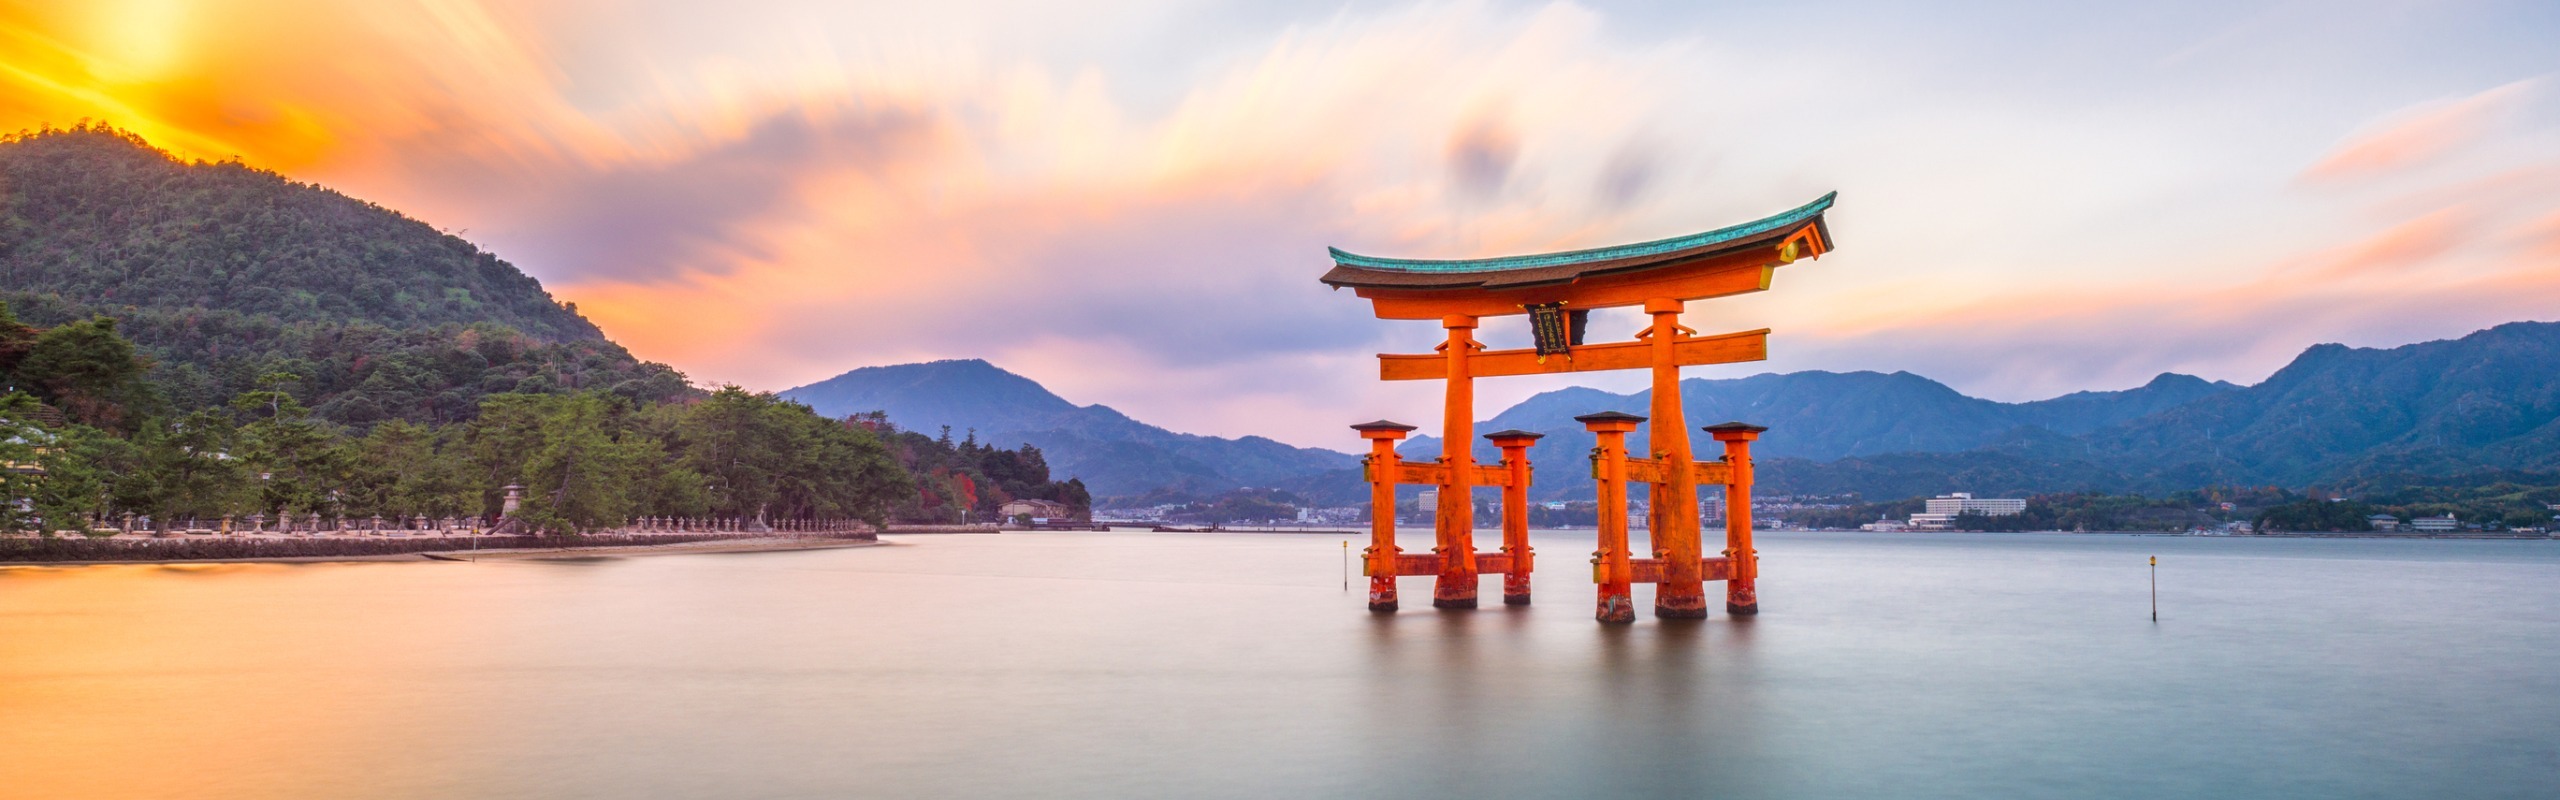 3-Week Japan Itineraries: The 2 Smart Options